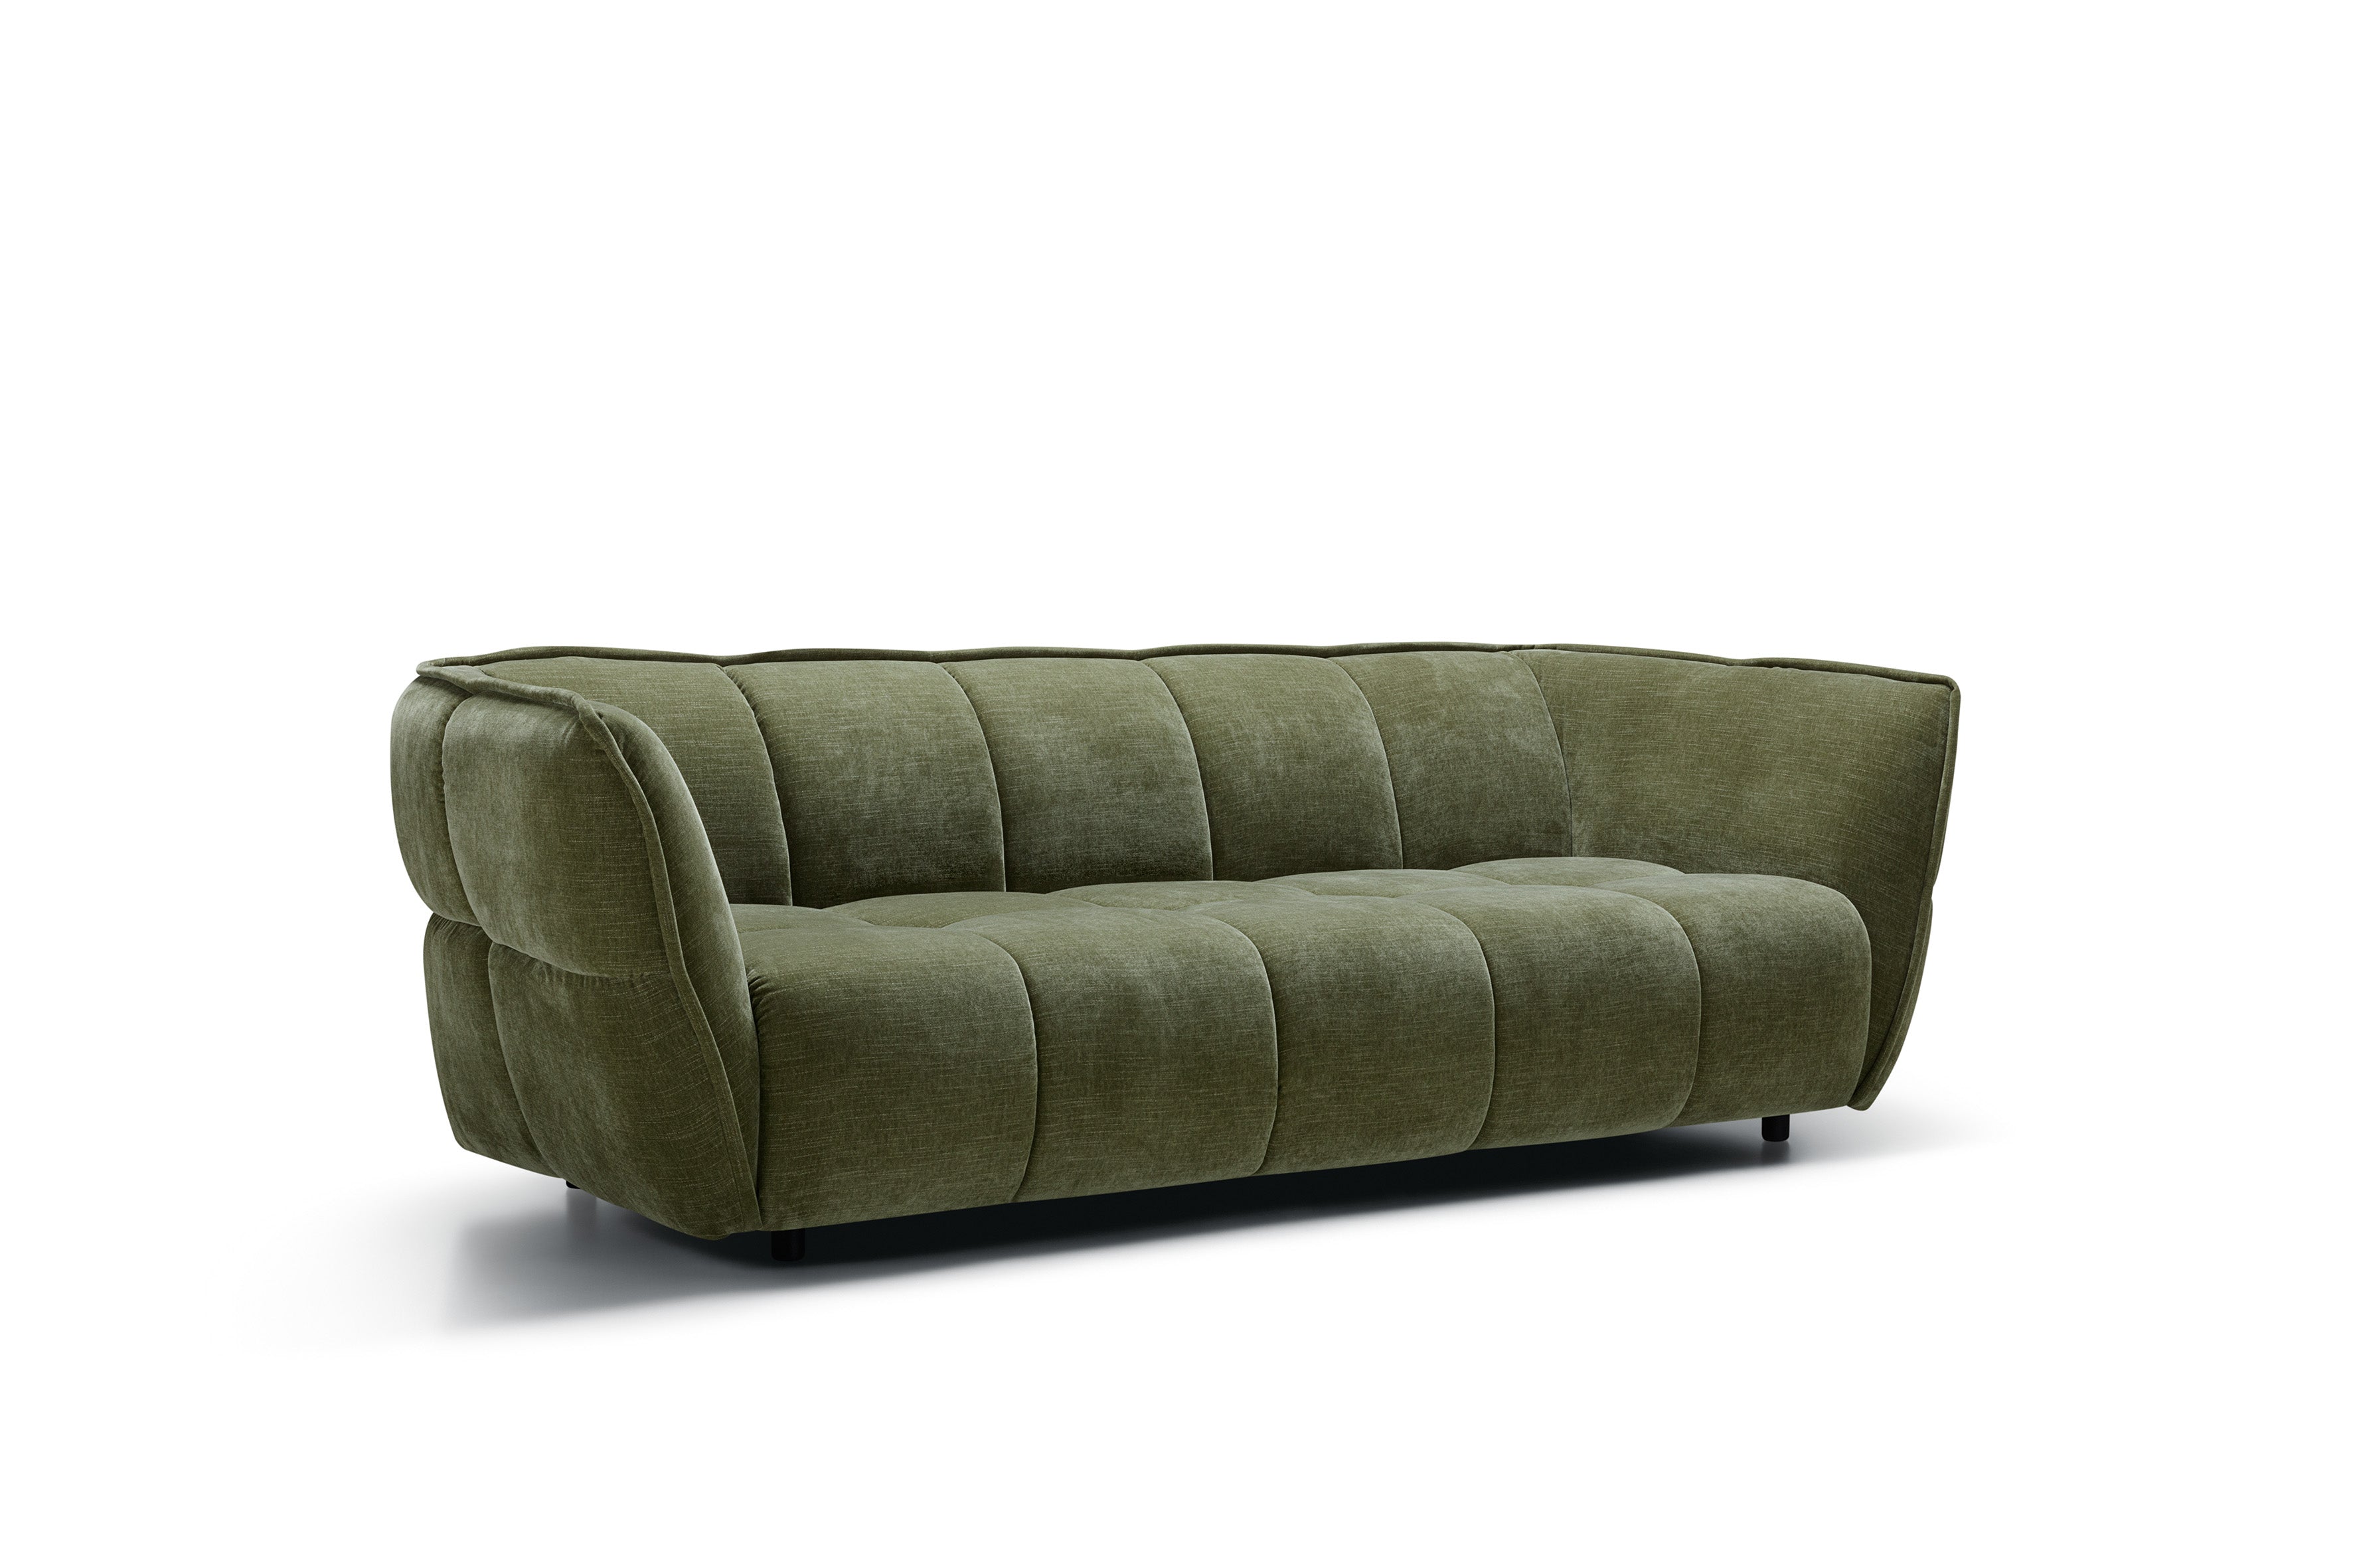 Mastrella Clove 3 Seater Sofa